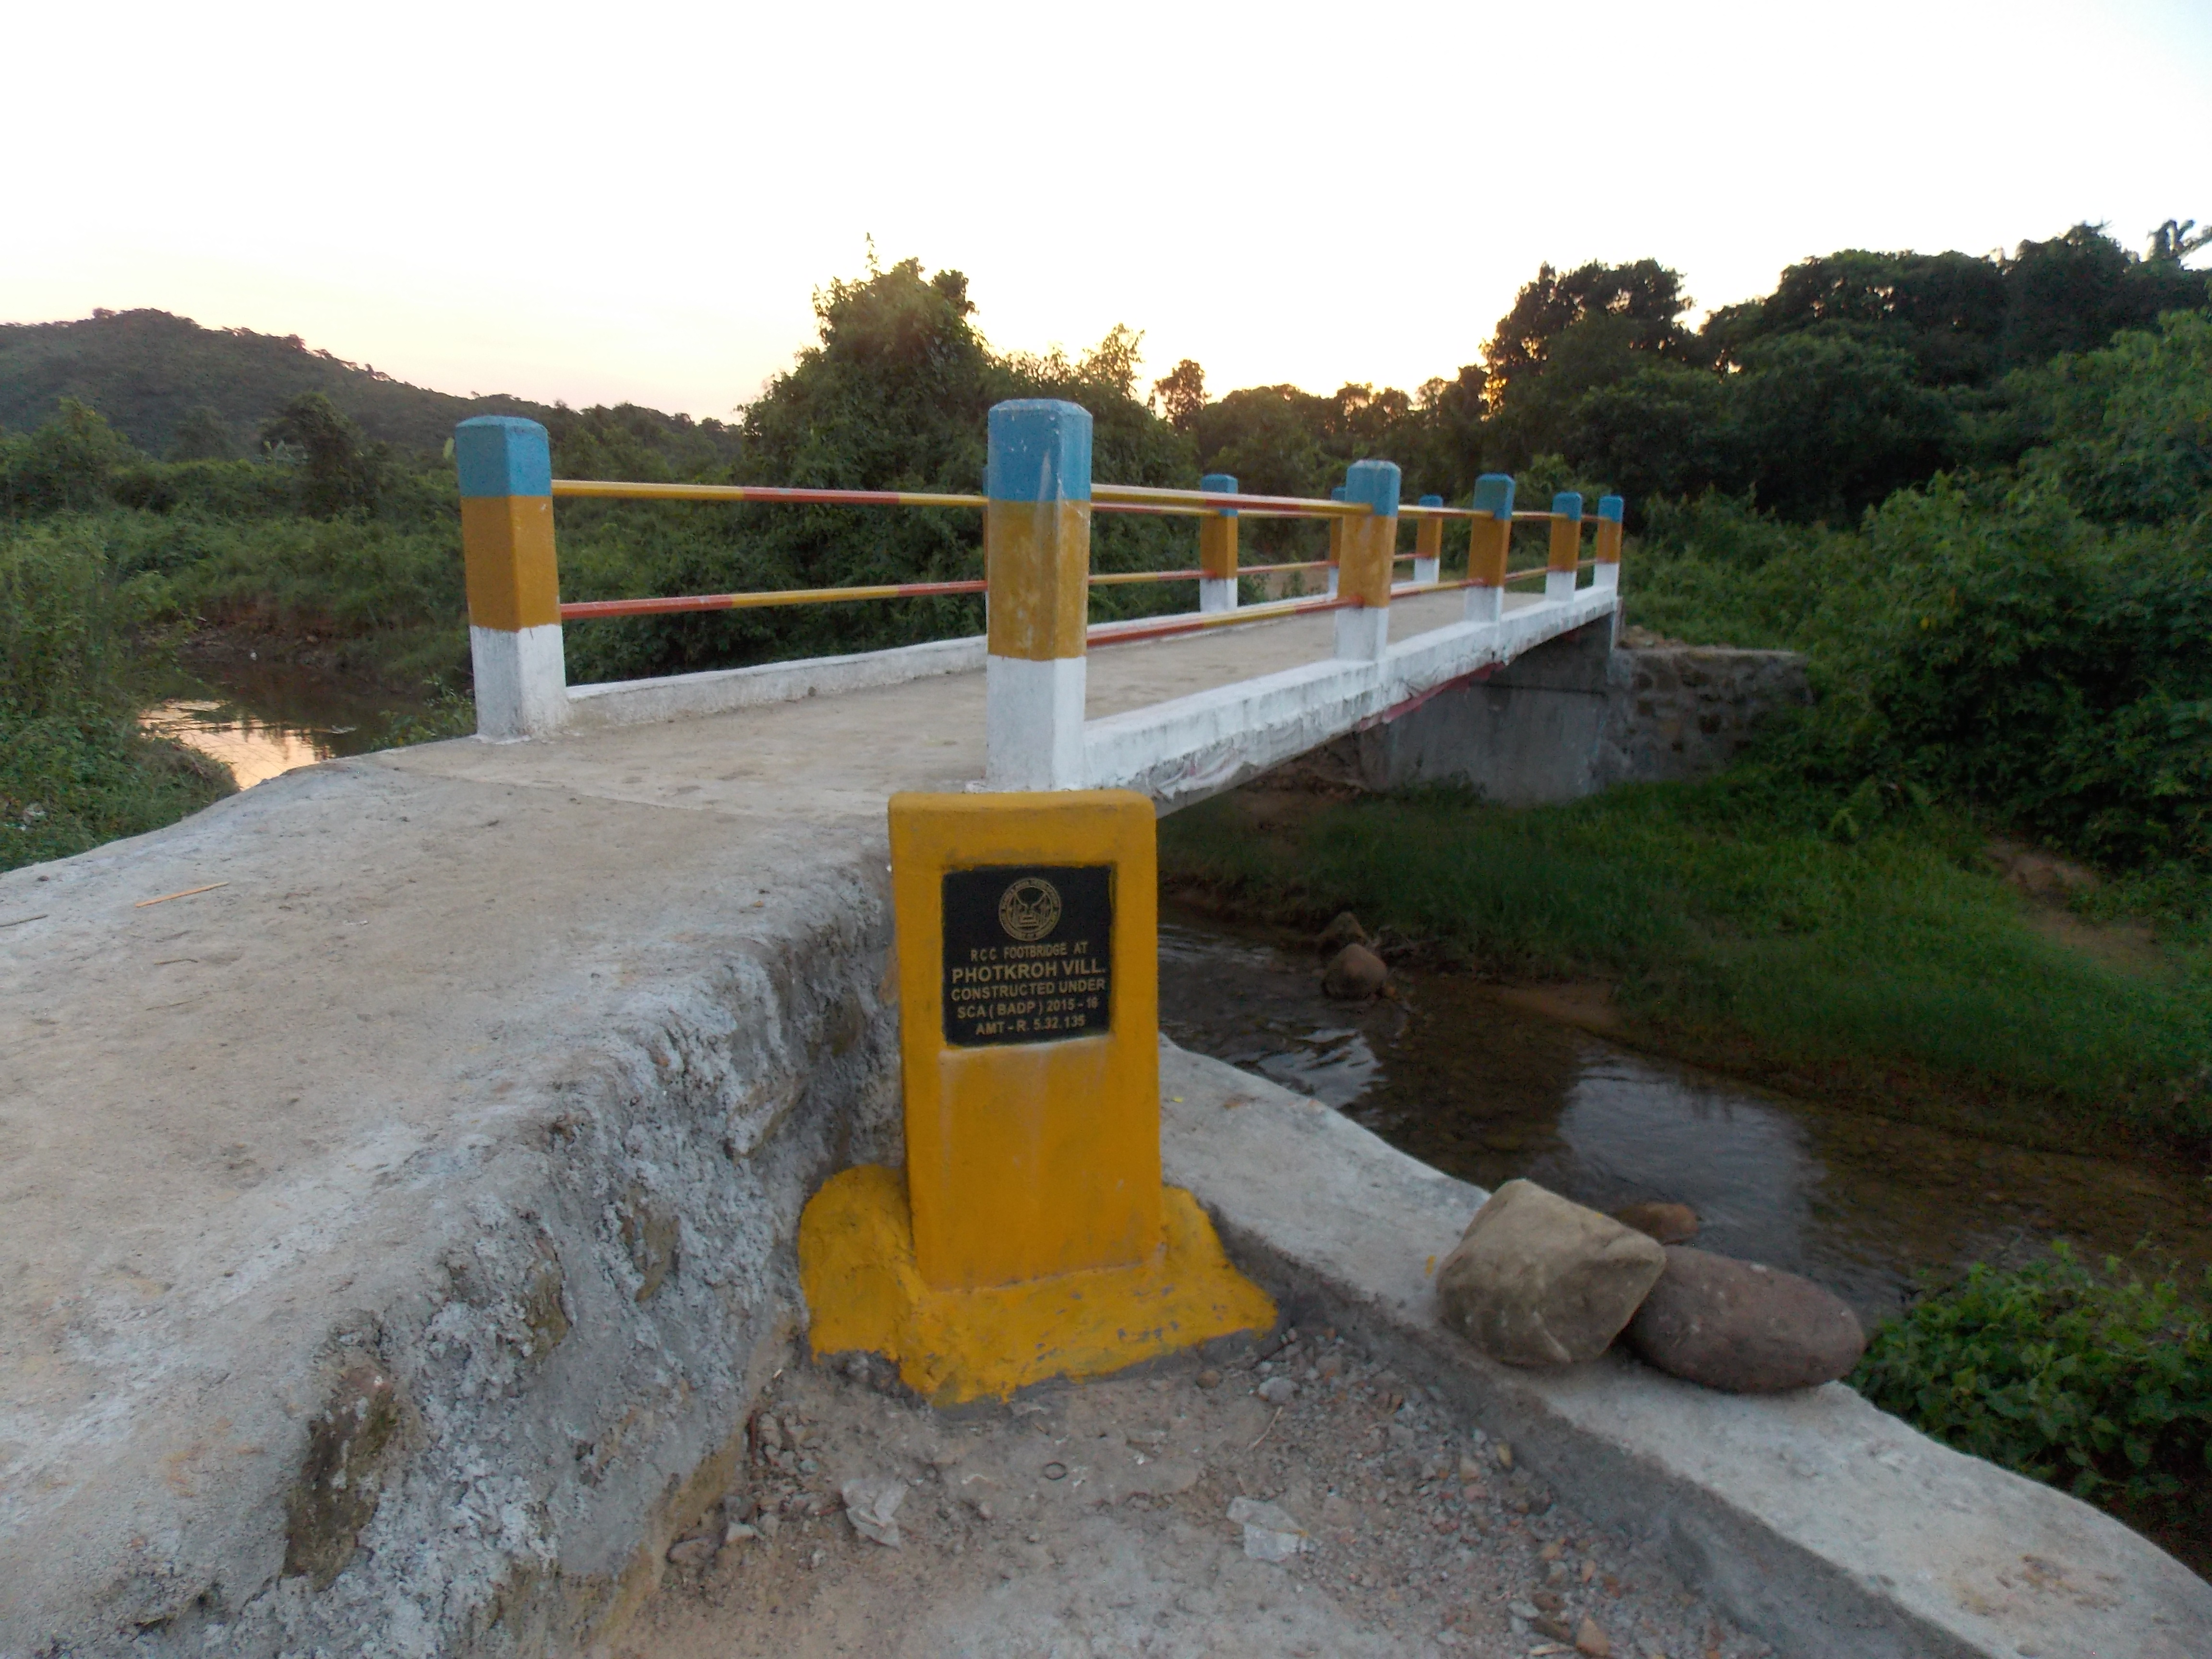 RCC footbridge at Photkroh village